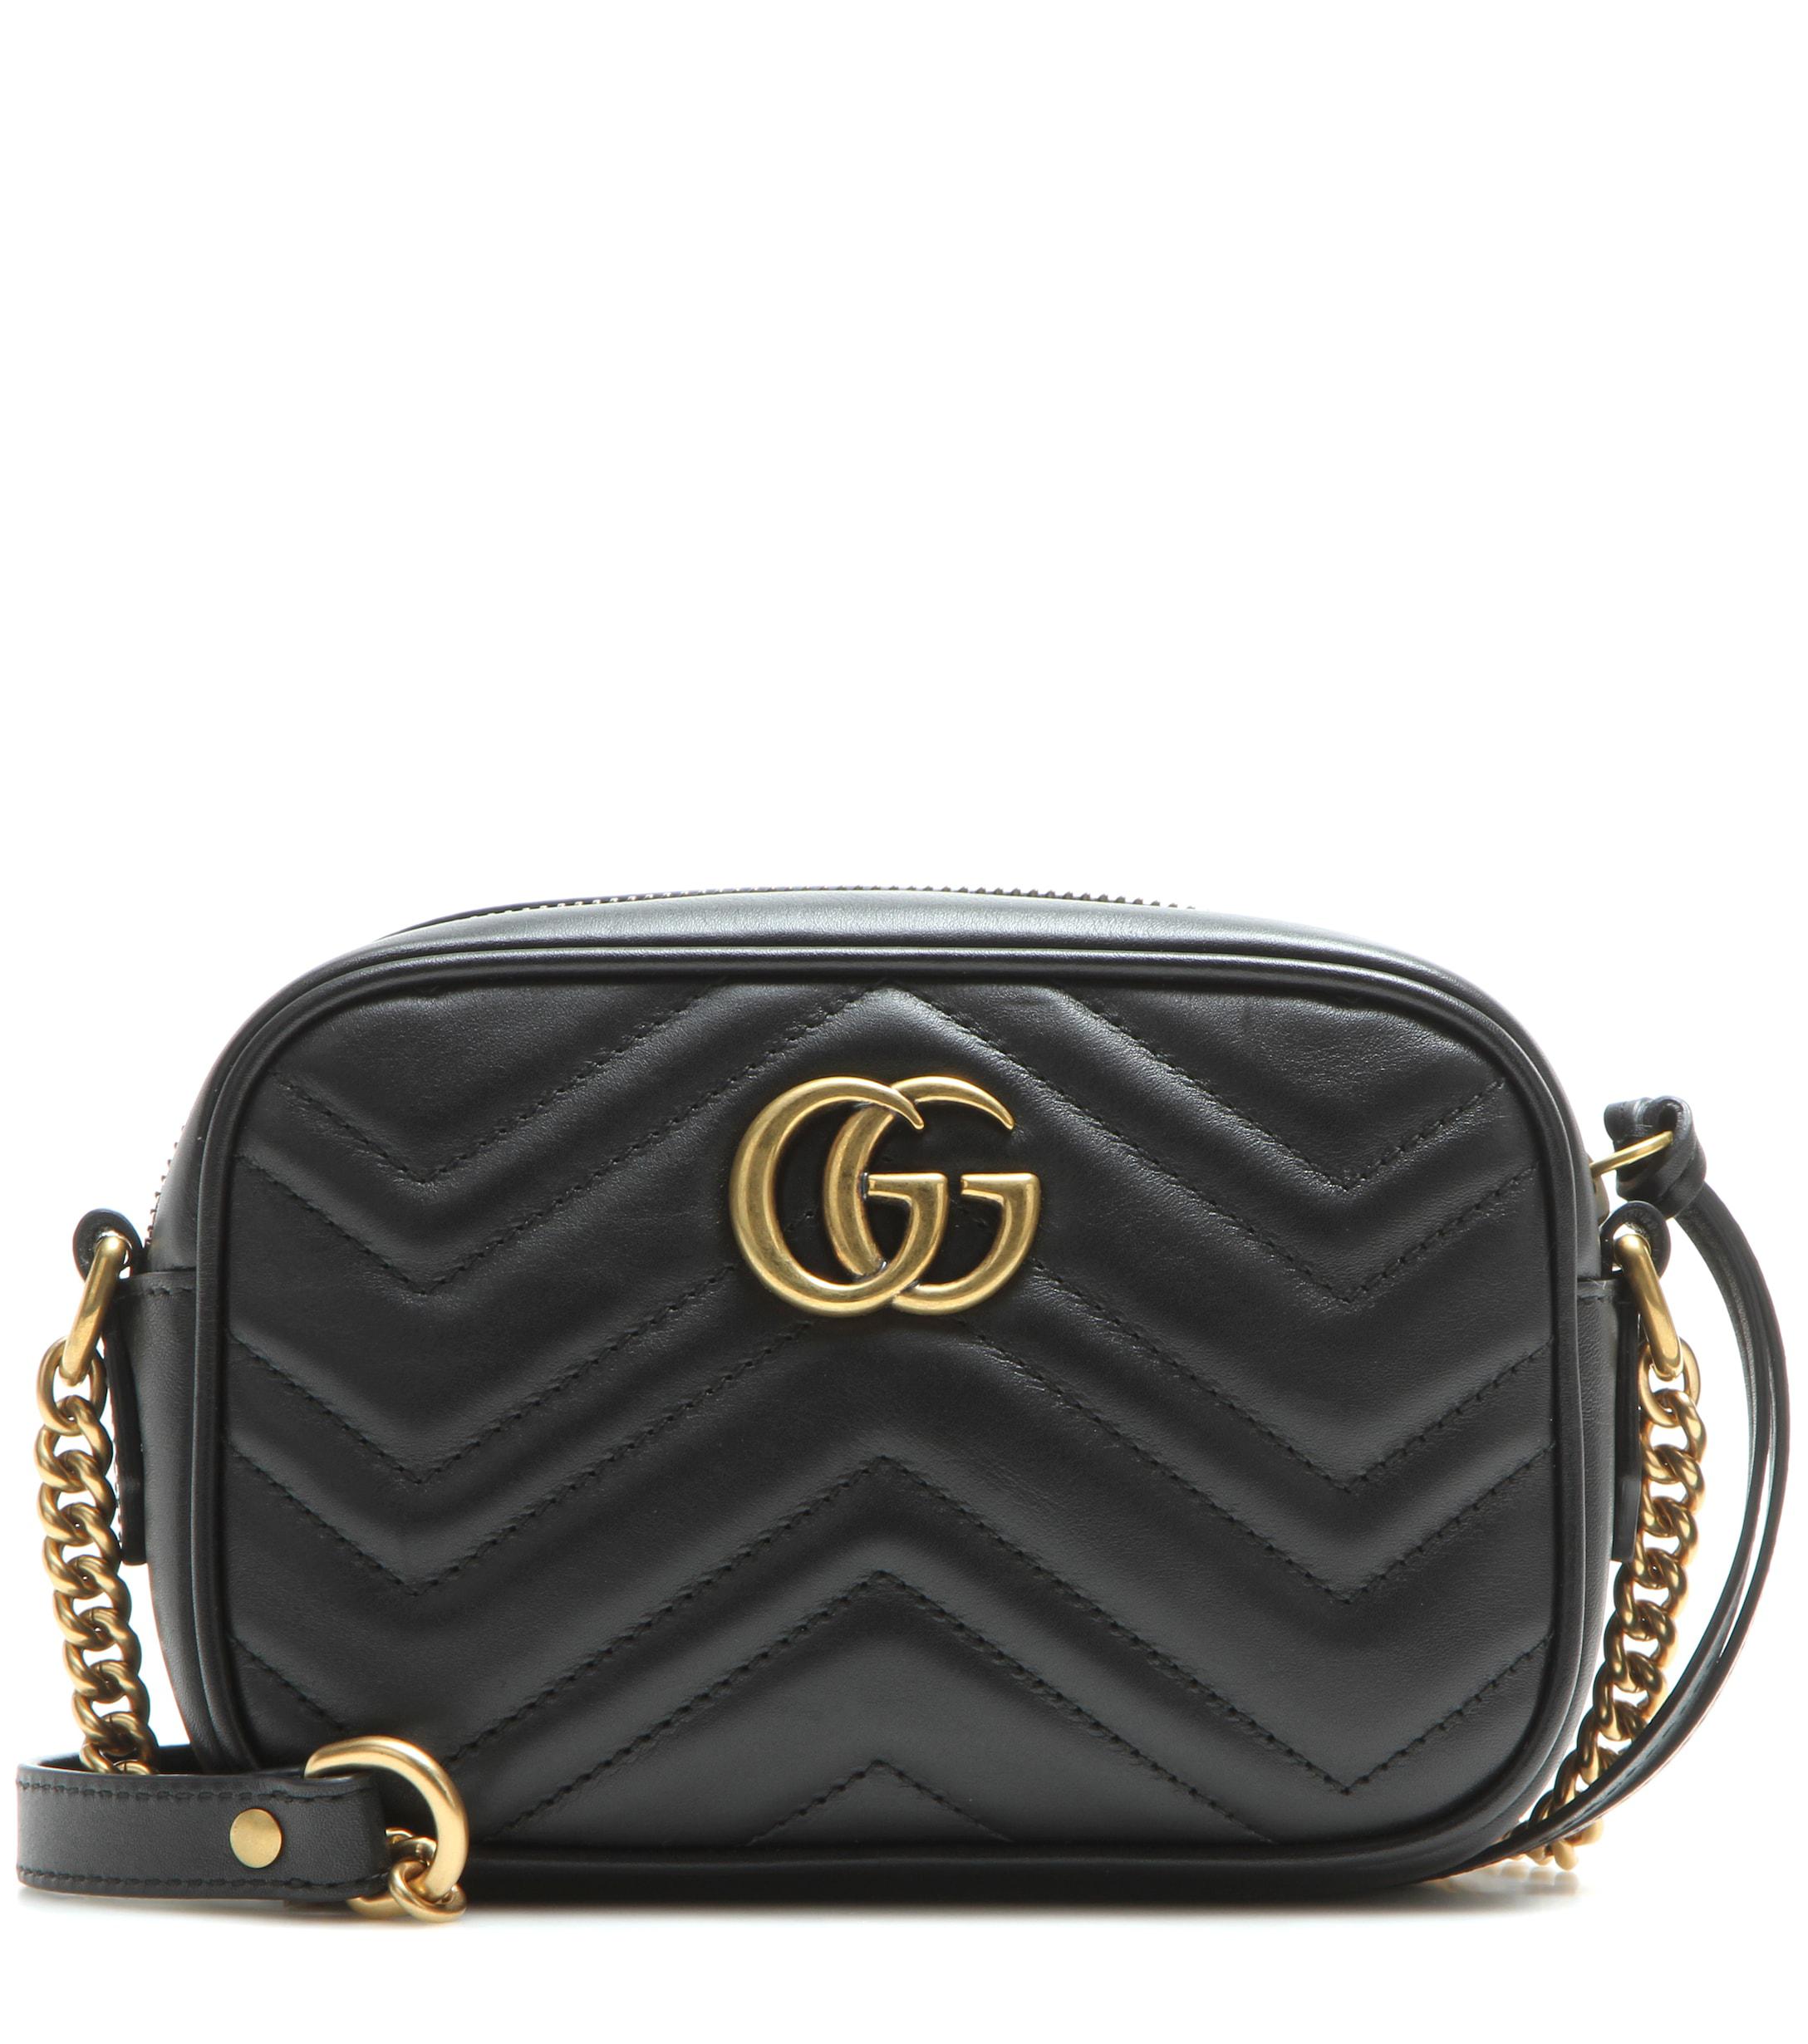 Gucci GG Marmont Mini Crossbody Bag in Black - Save 20% - Lyst